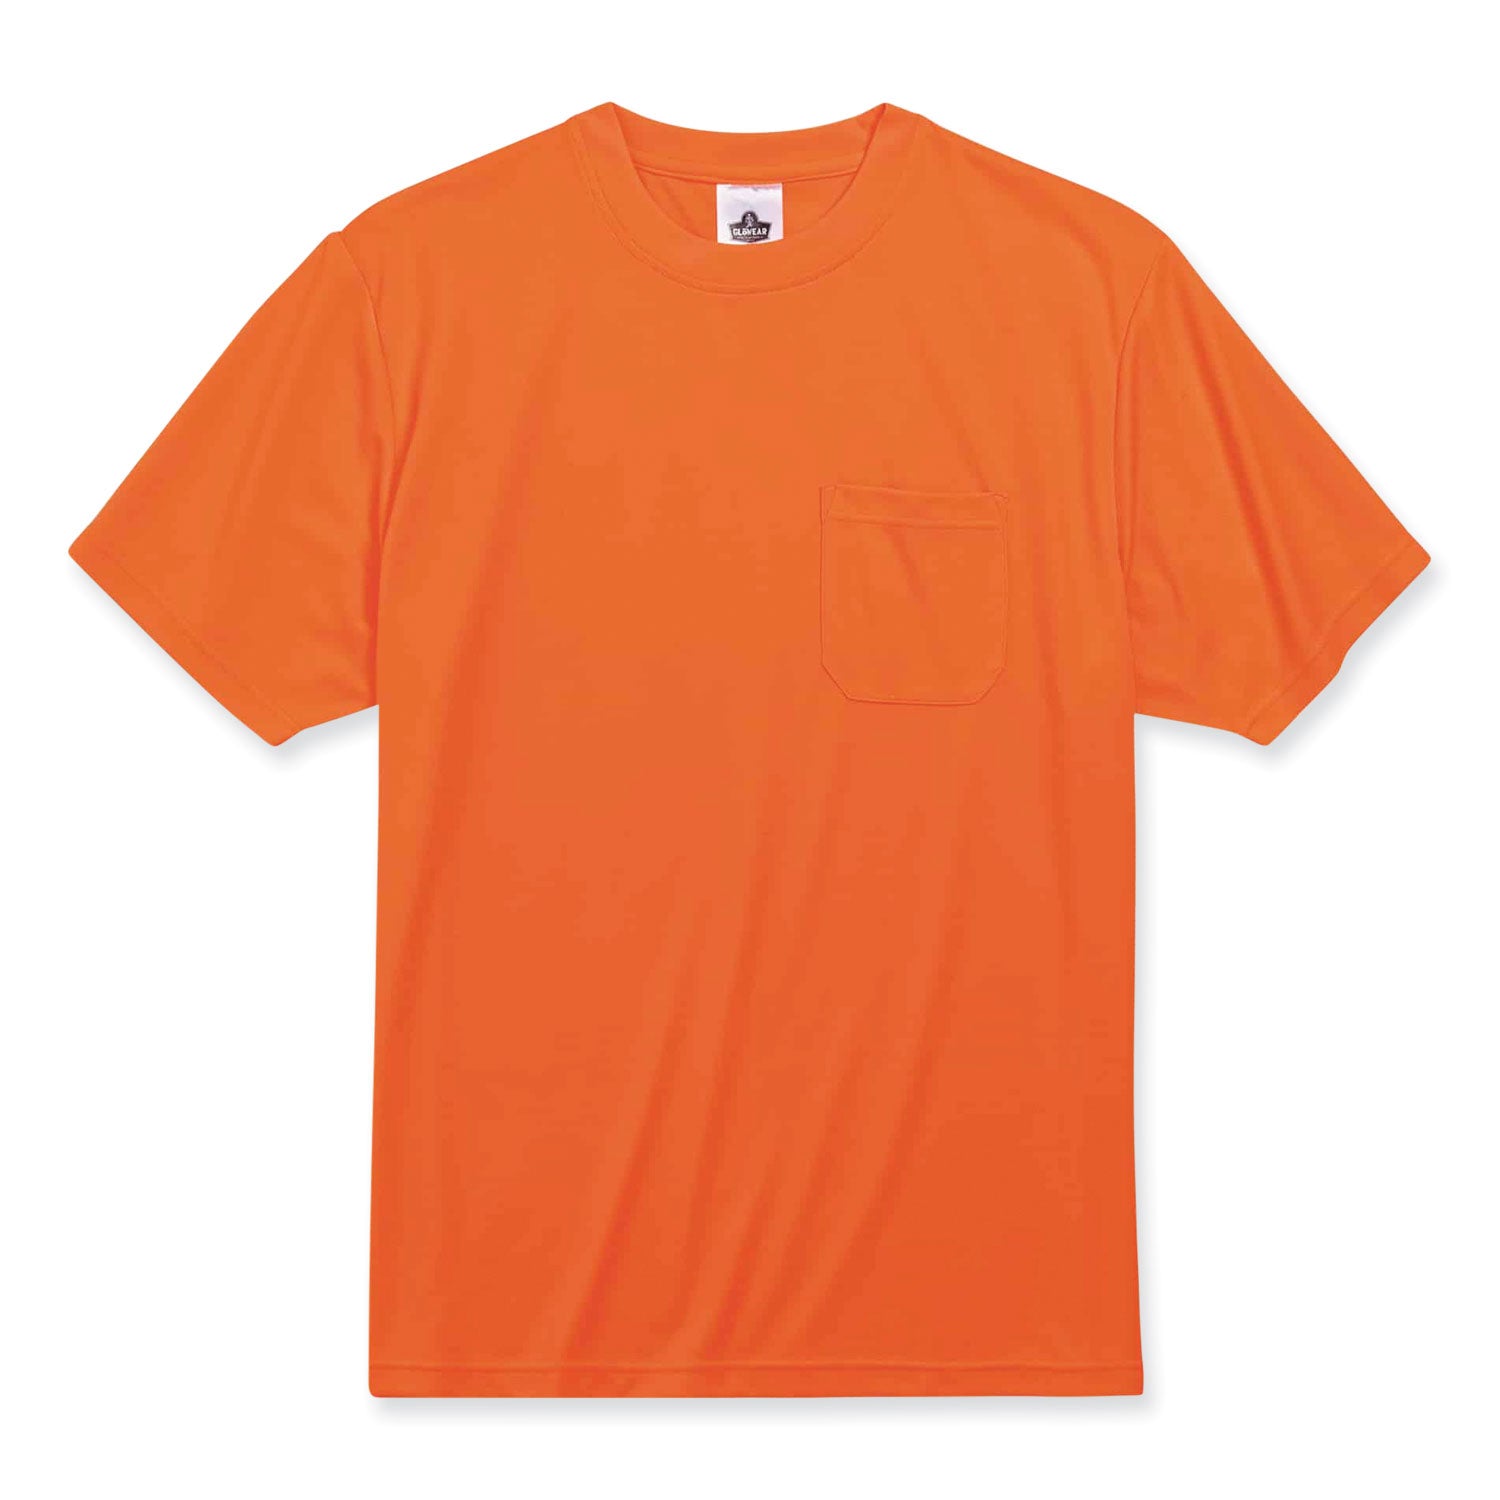 glowear-8089-non-certified-hi-vis-t-shirt-polyester-medium-orange-ships-in-1-3-business-days_ego21563 - 1